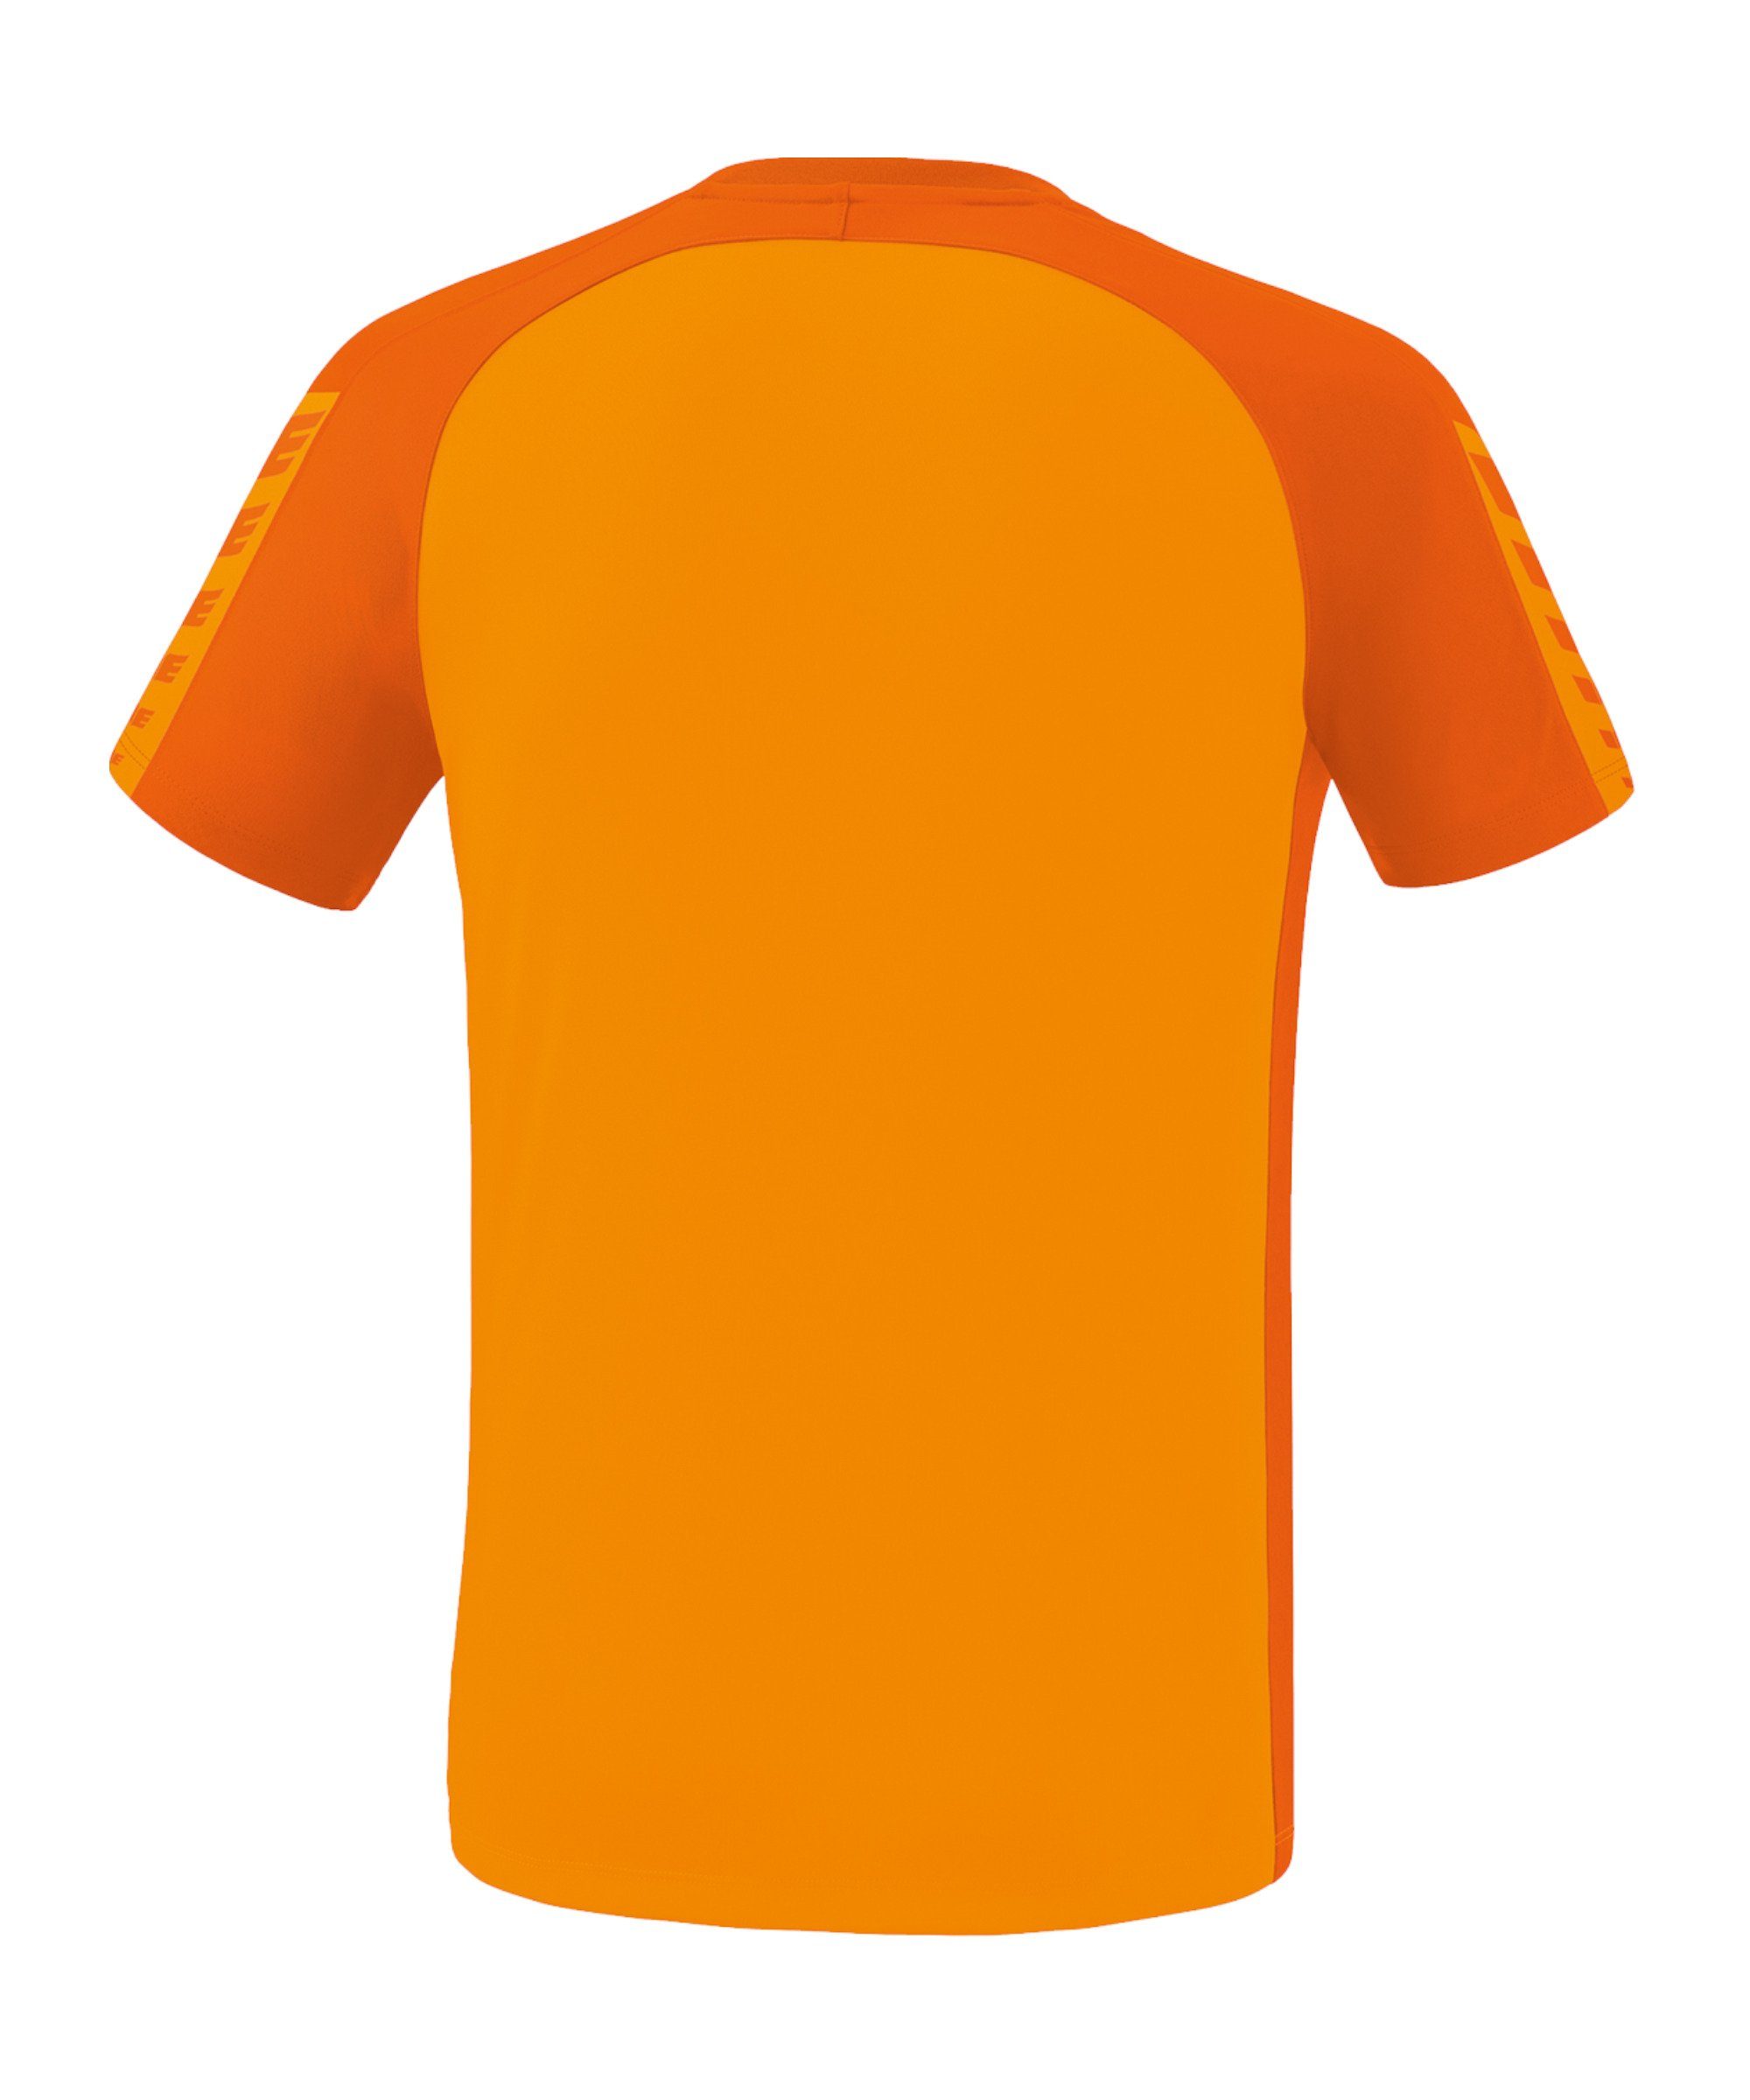 Erima T-Shirt Six Wings T-Shirt default orange